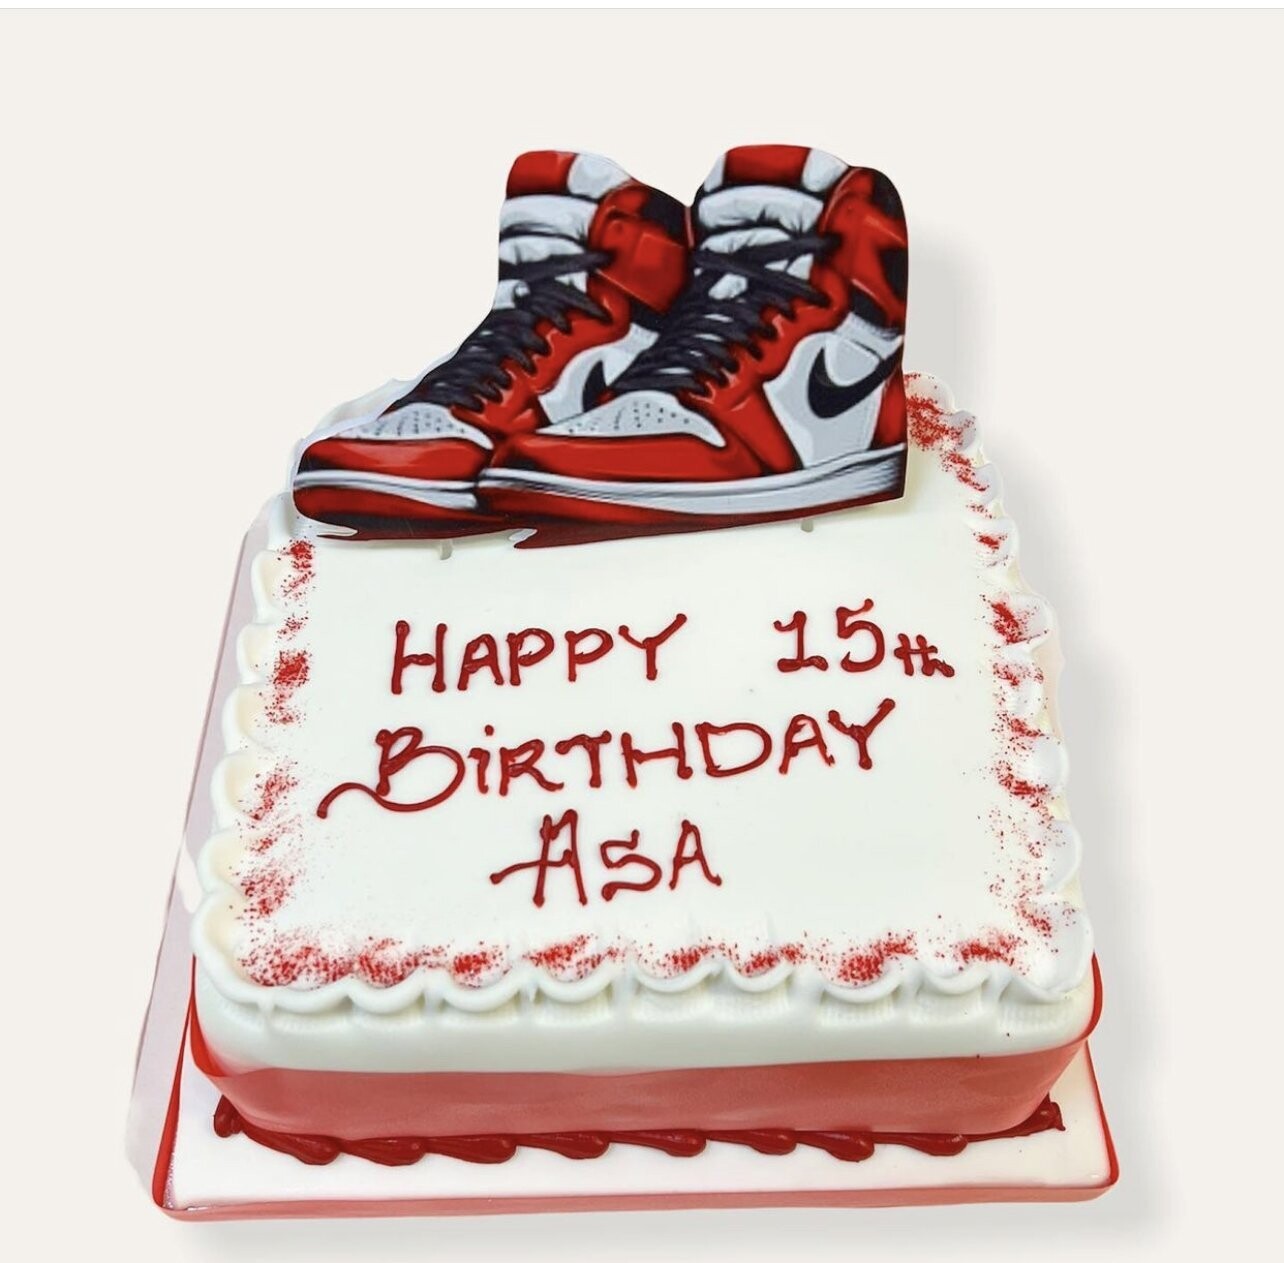 Basketball Michael Jordan Premium Edible Icing Cake Decoration Topper Image  19cm | eBay